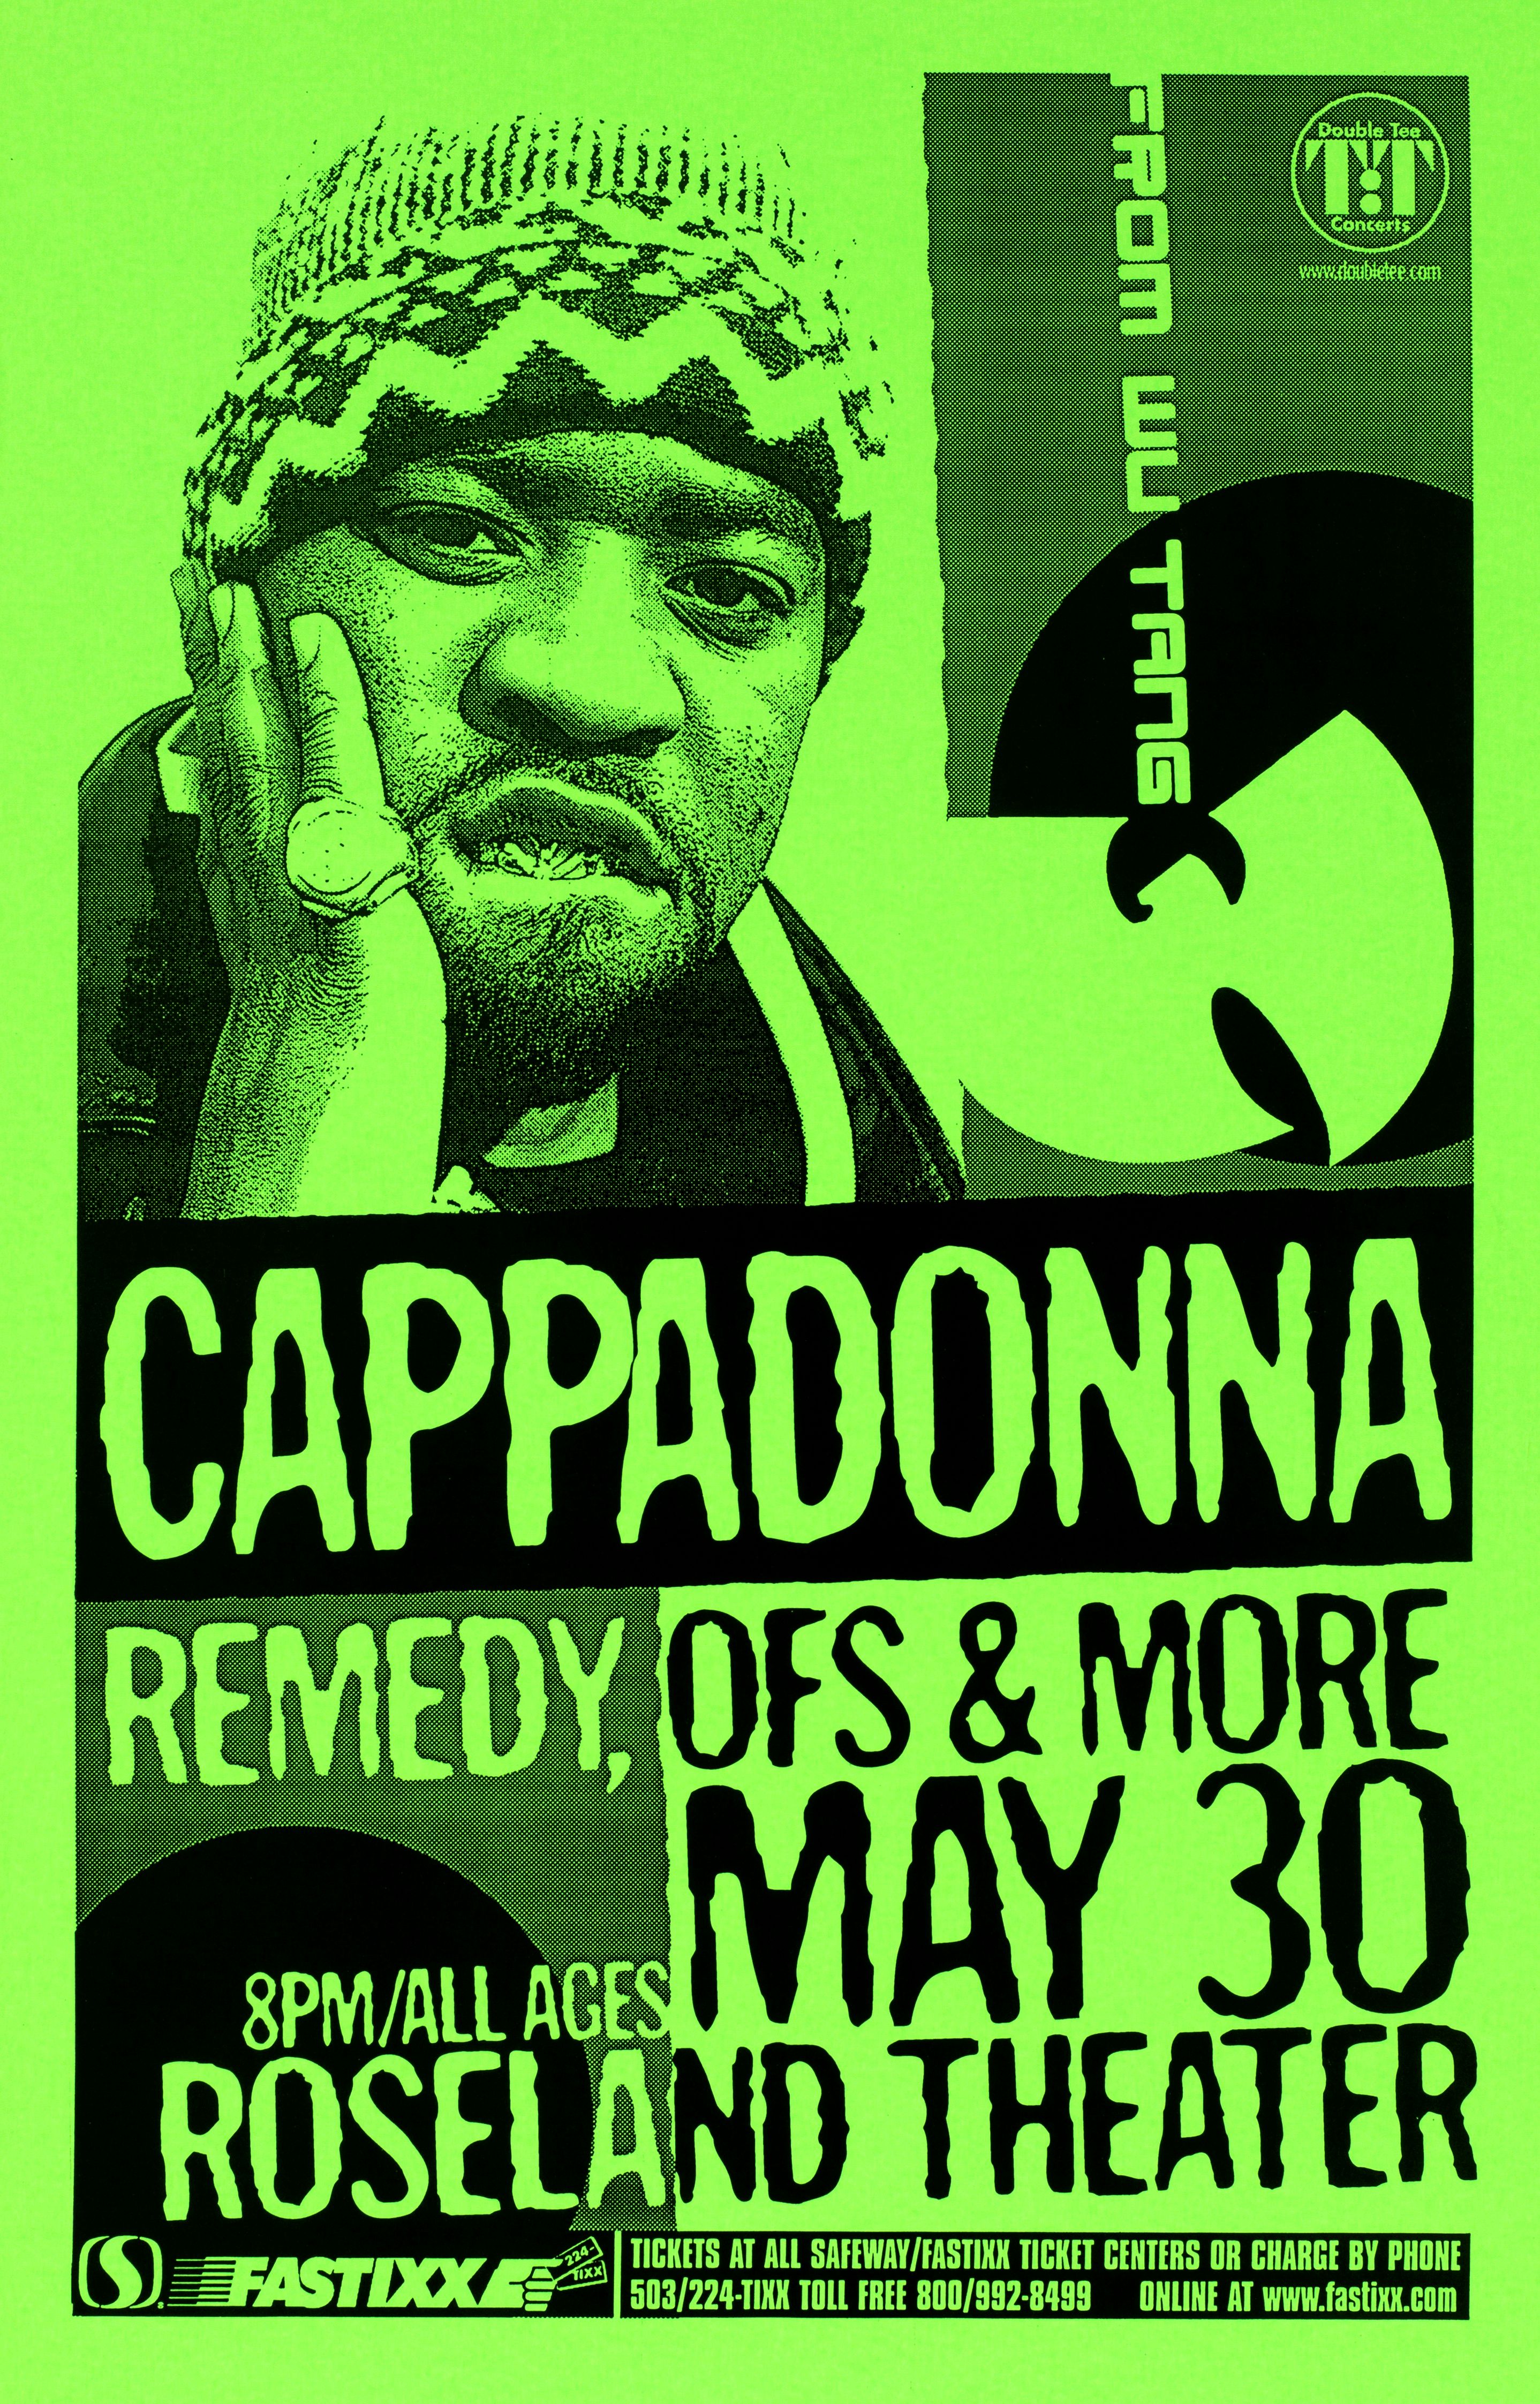 MXP-182.6 Cappadonna 2001 Roseland Theater  May 30 Concert Poster